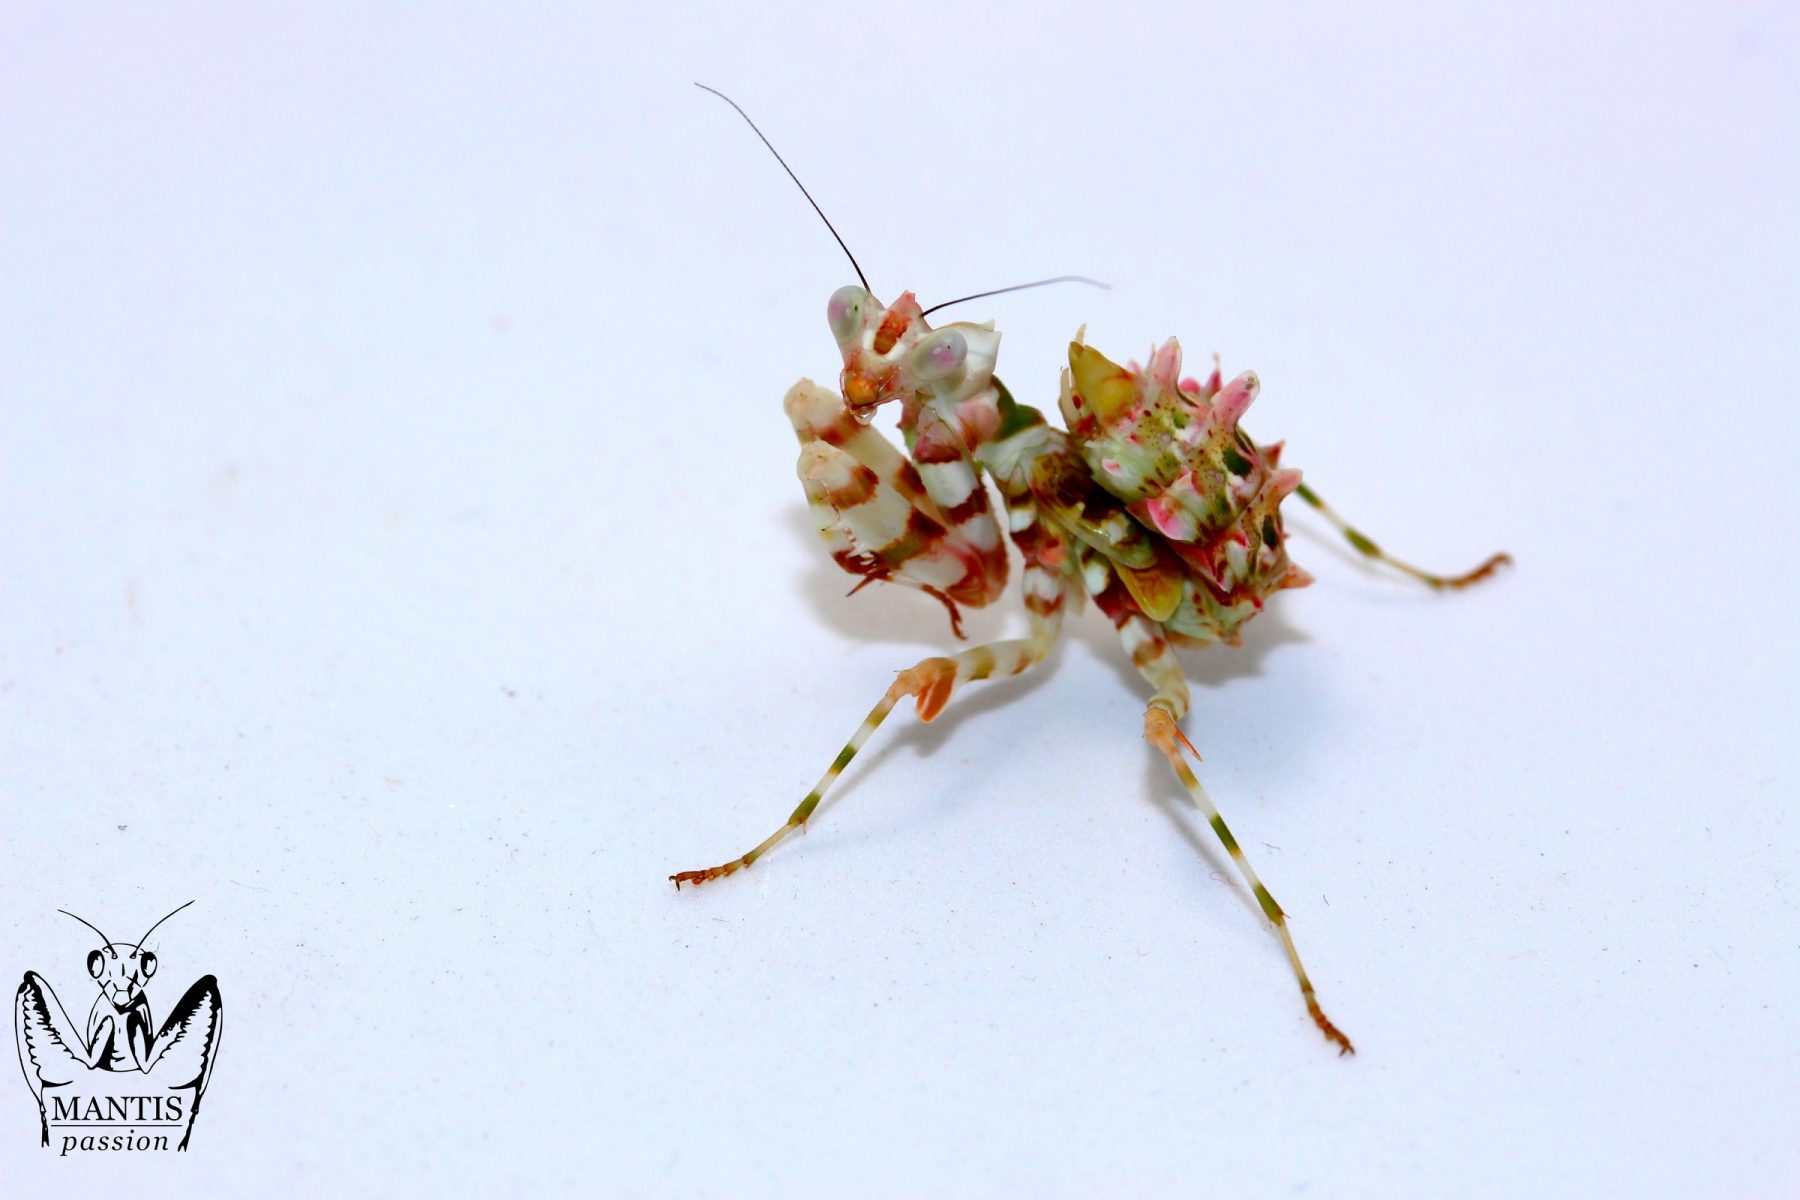 Chlidonoptera lestoni femelle sub adulte